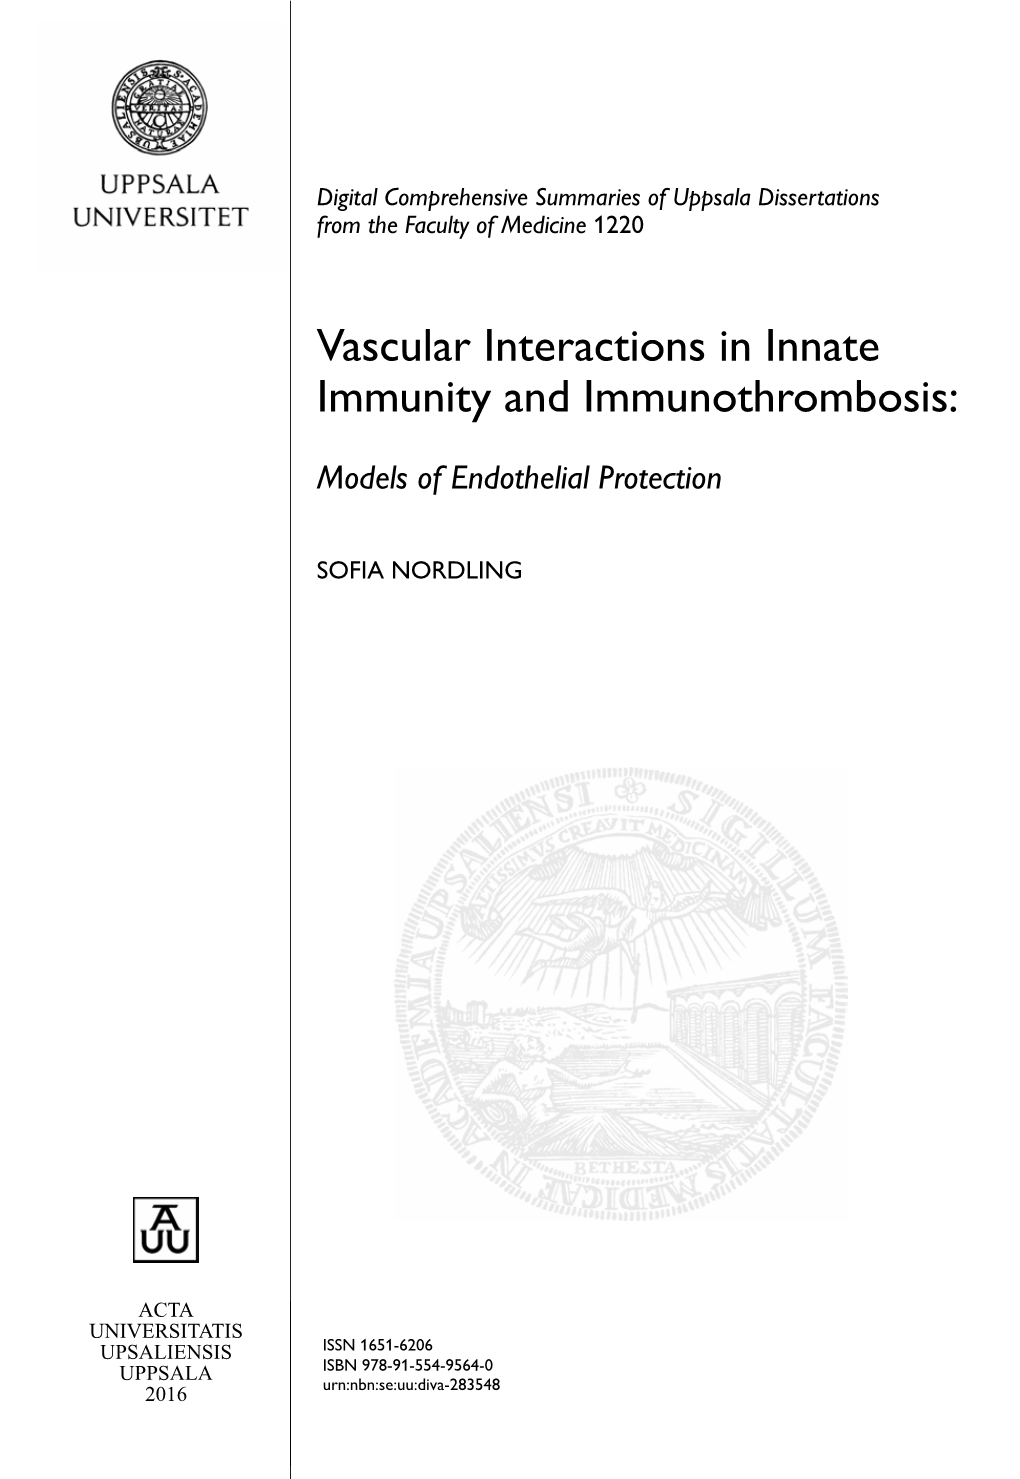 Vascular Interactions in Innate Immunity and Immunothrombosis